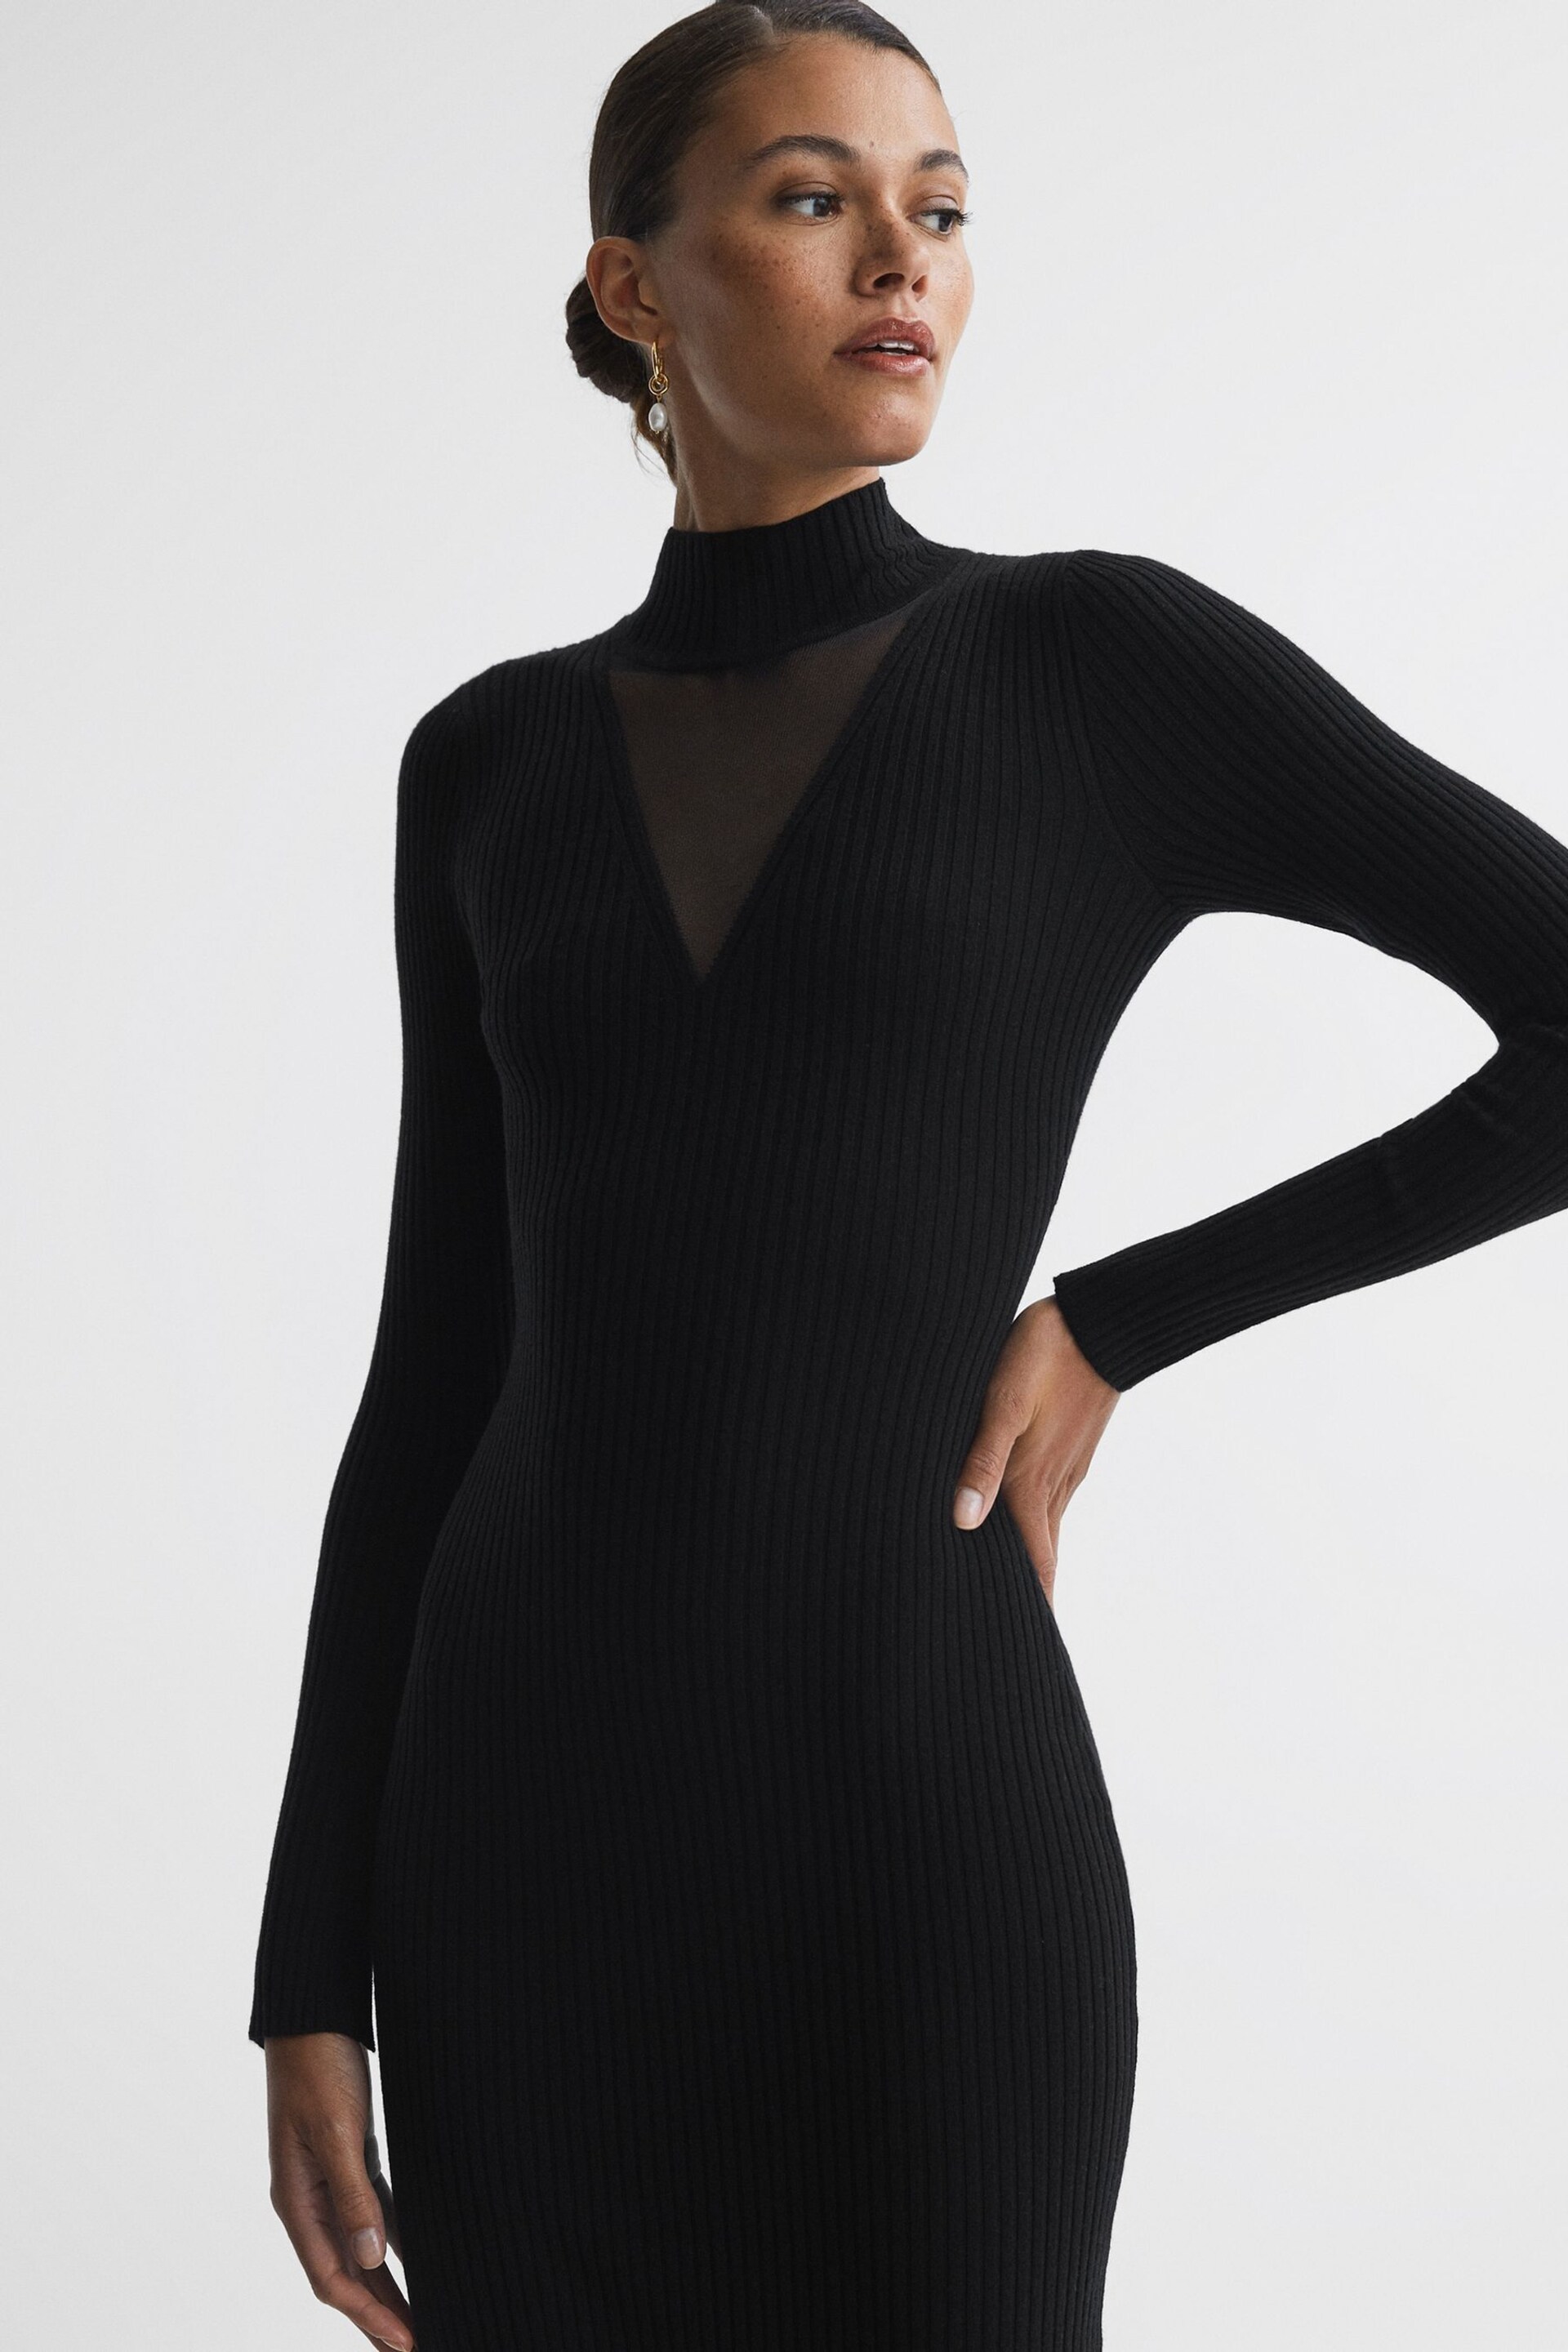 Reiss Black Sabrina Ribbed Mesh Panel Bodycon Midi Dress - Image 3 of 5